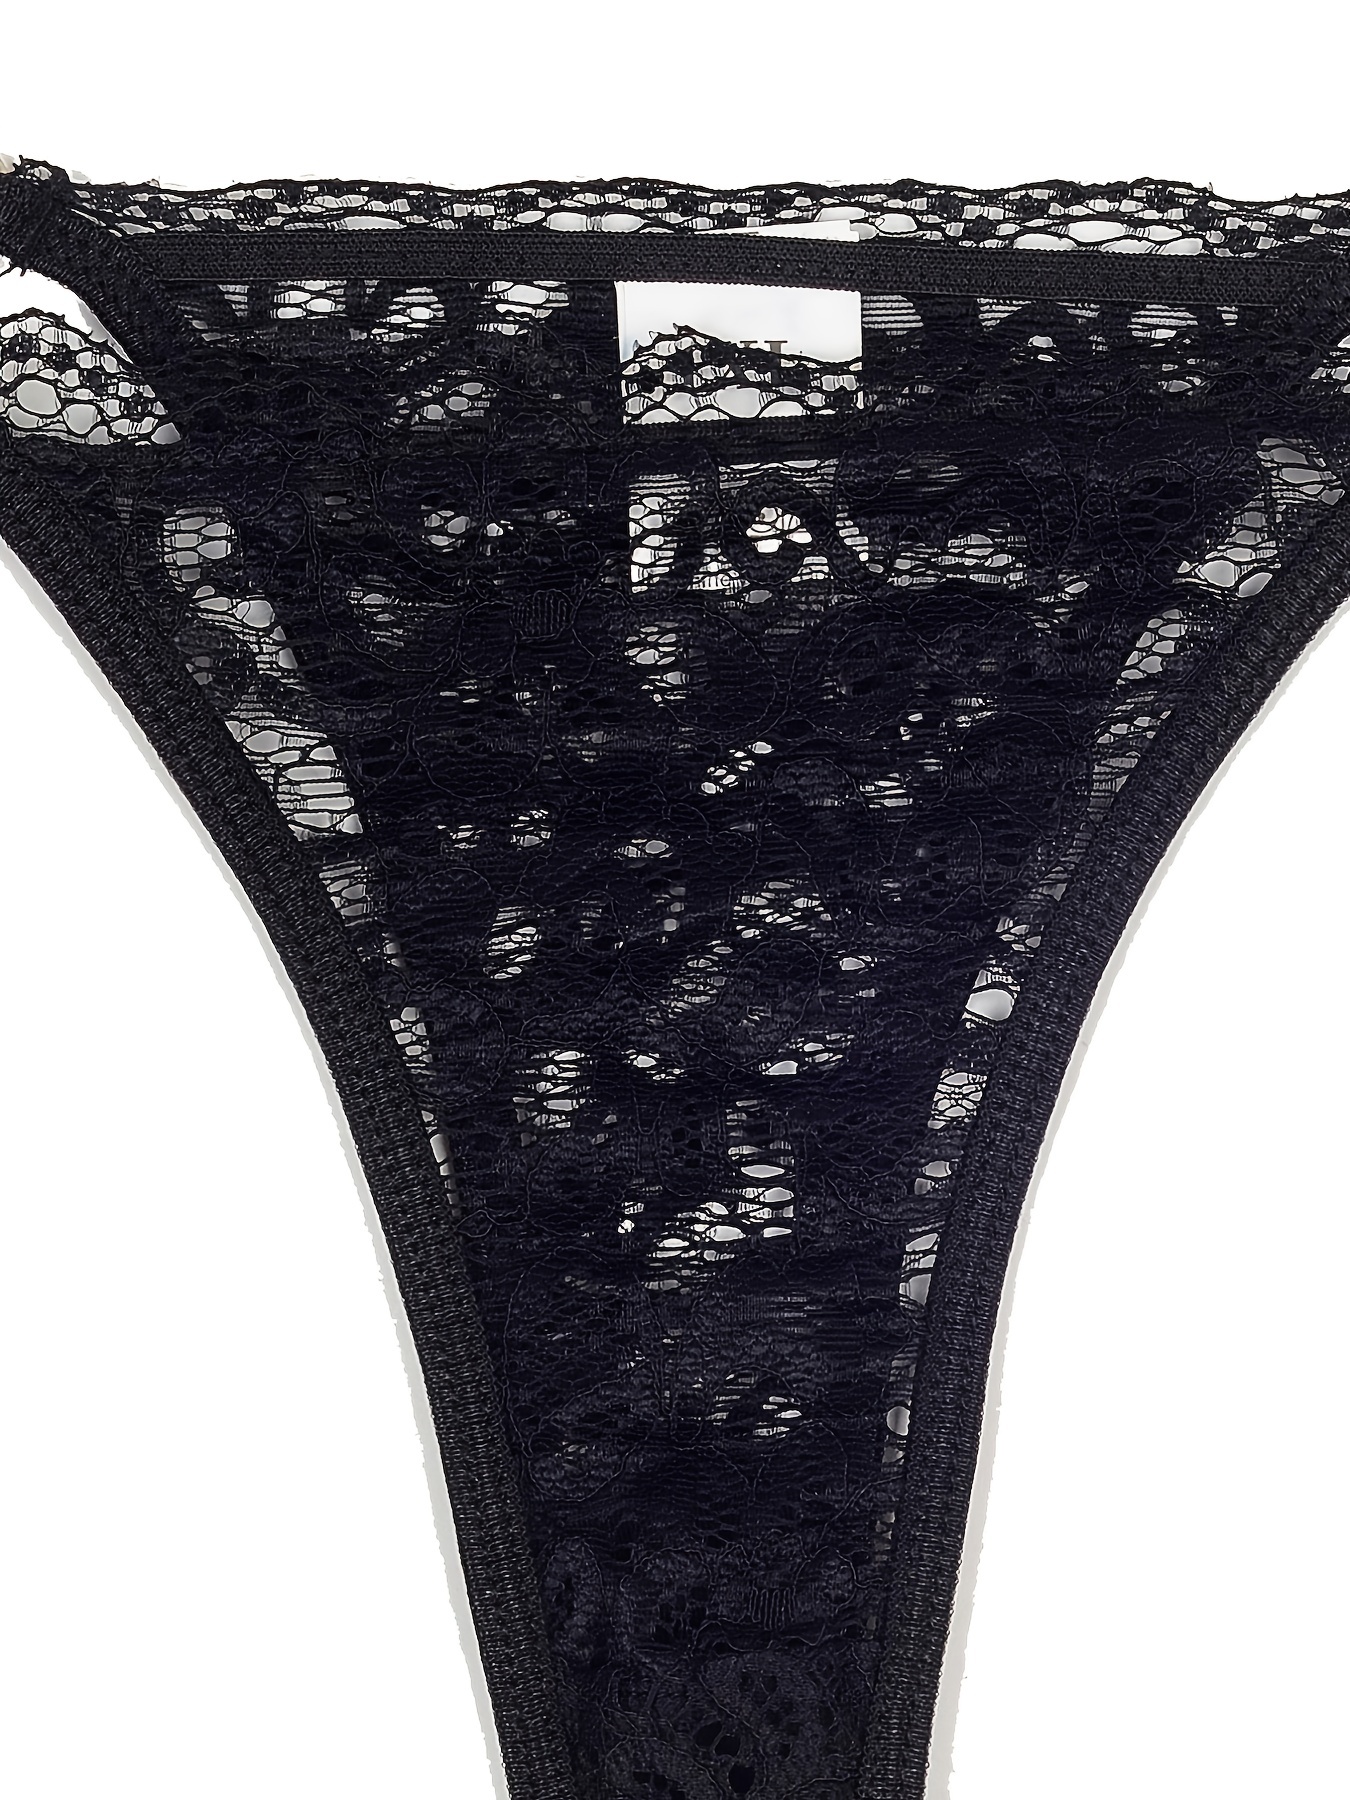 Women Sexy Lingerie Lace Open Thong G-string Underwear Charm Ladies Panties  Low Rise Erotic Nightwear Size L